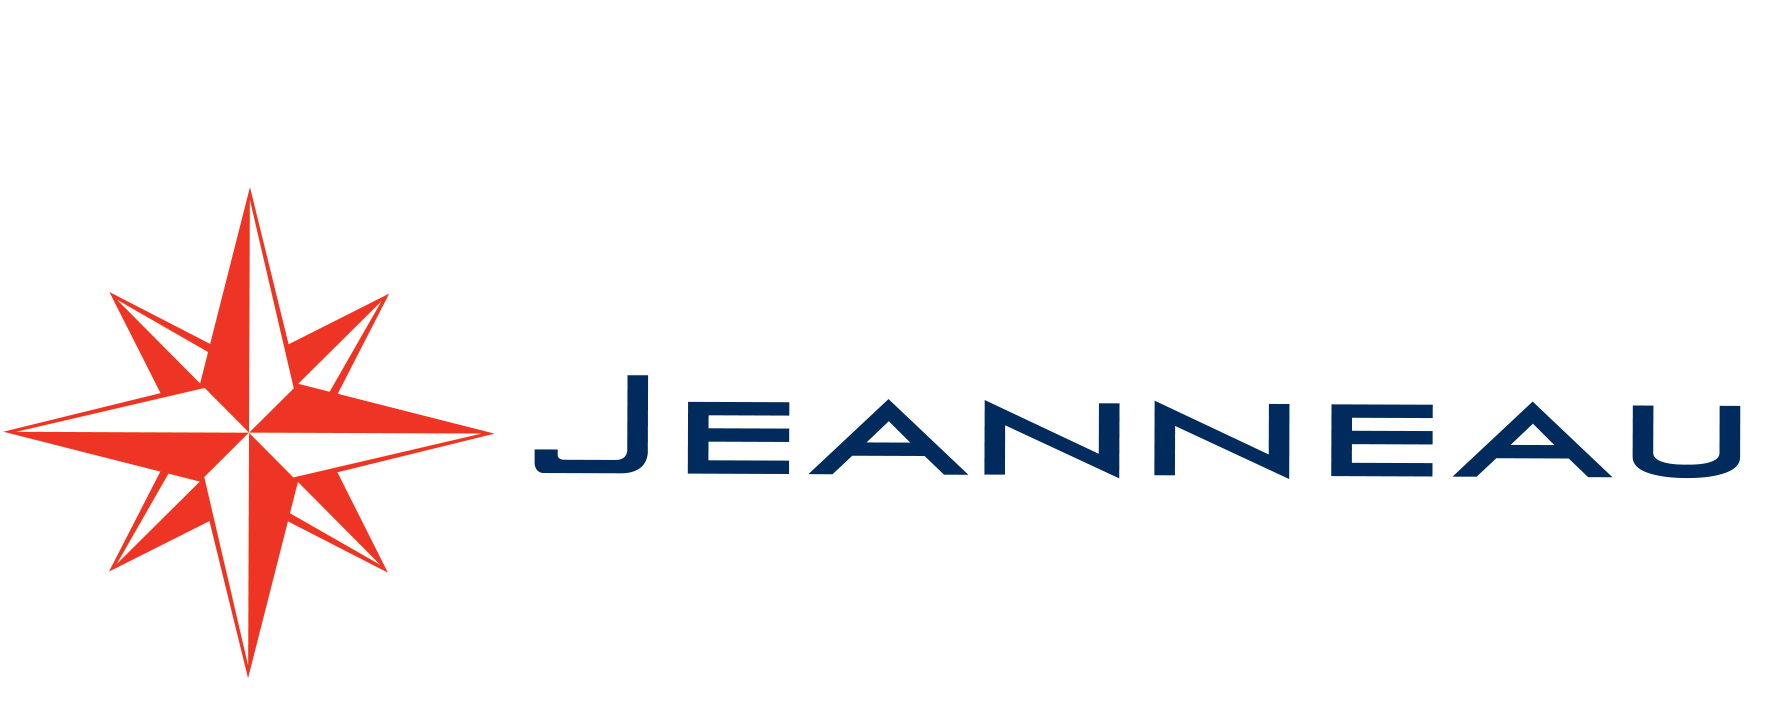 jeanneau-logo-alt